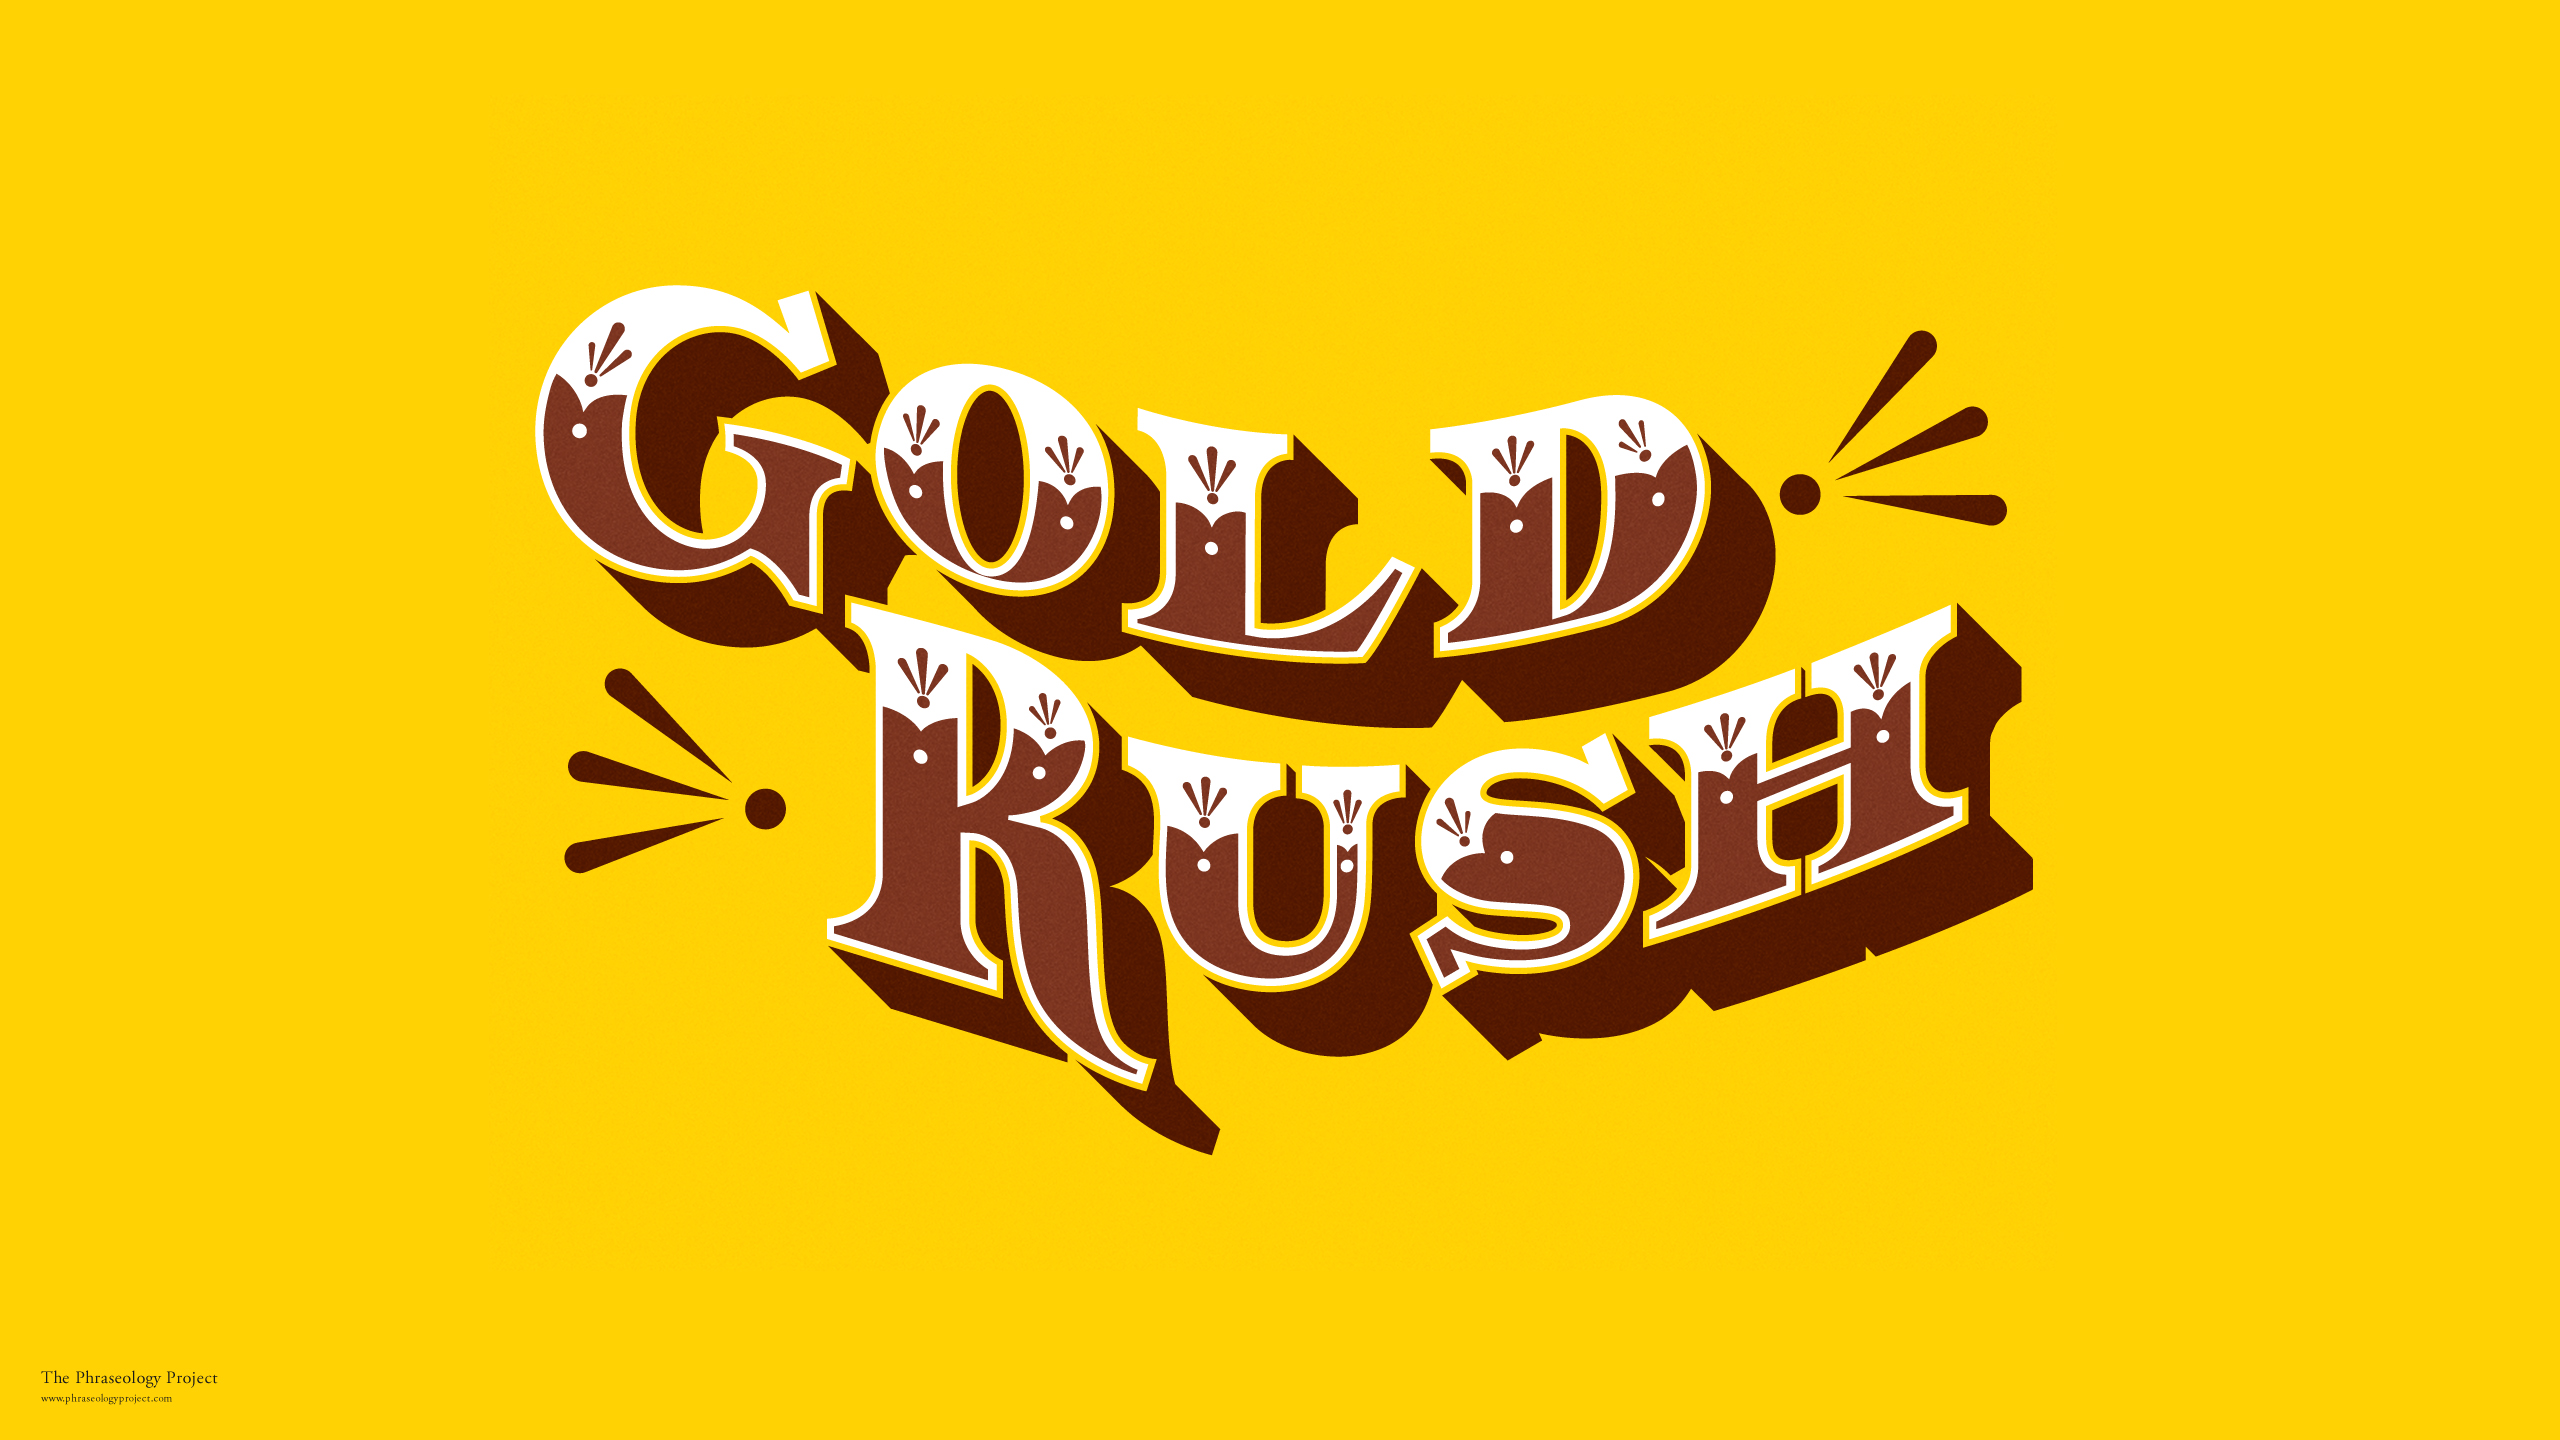 vbs gold rush decorating idea